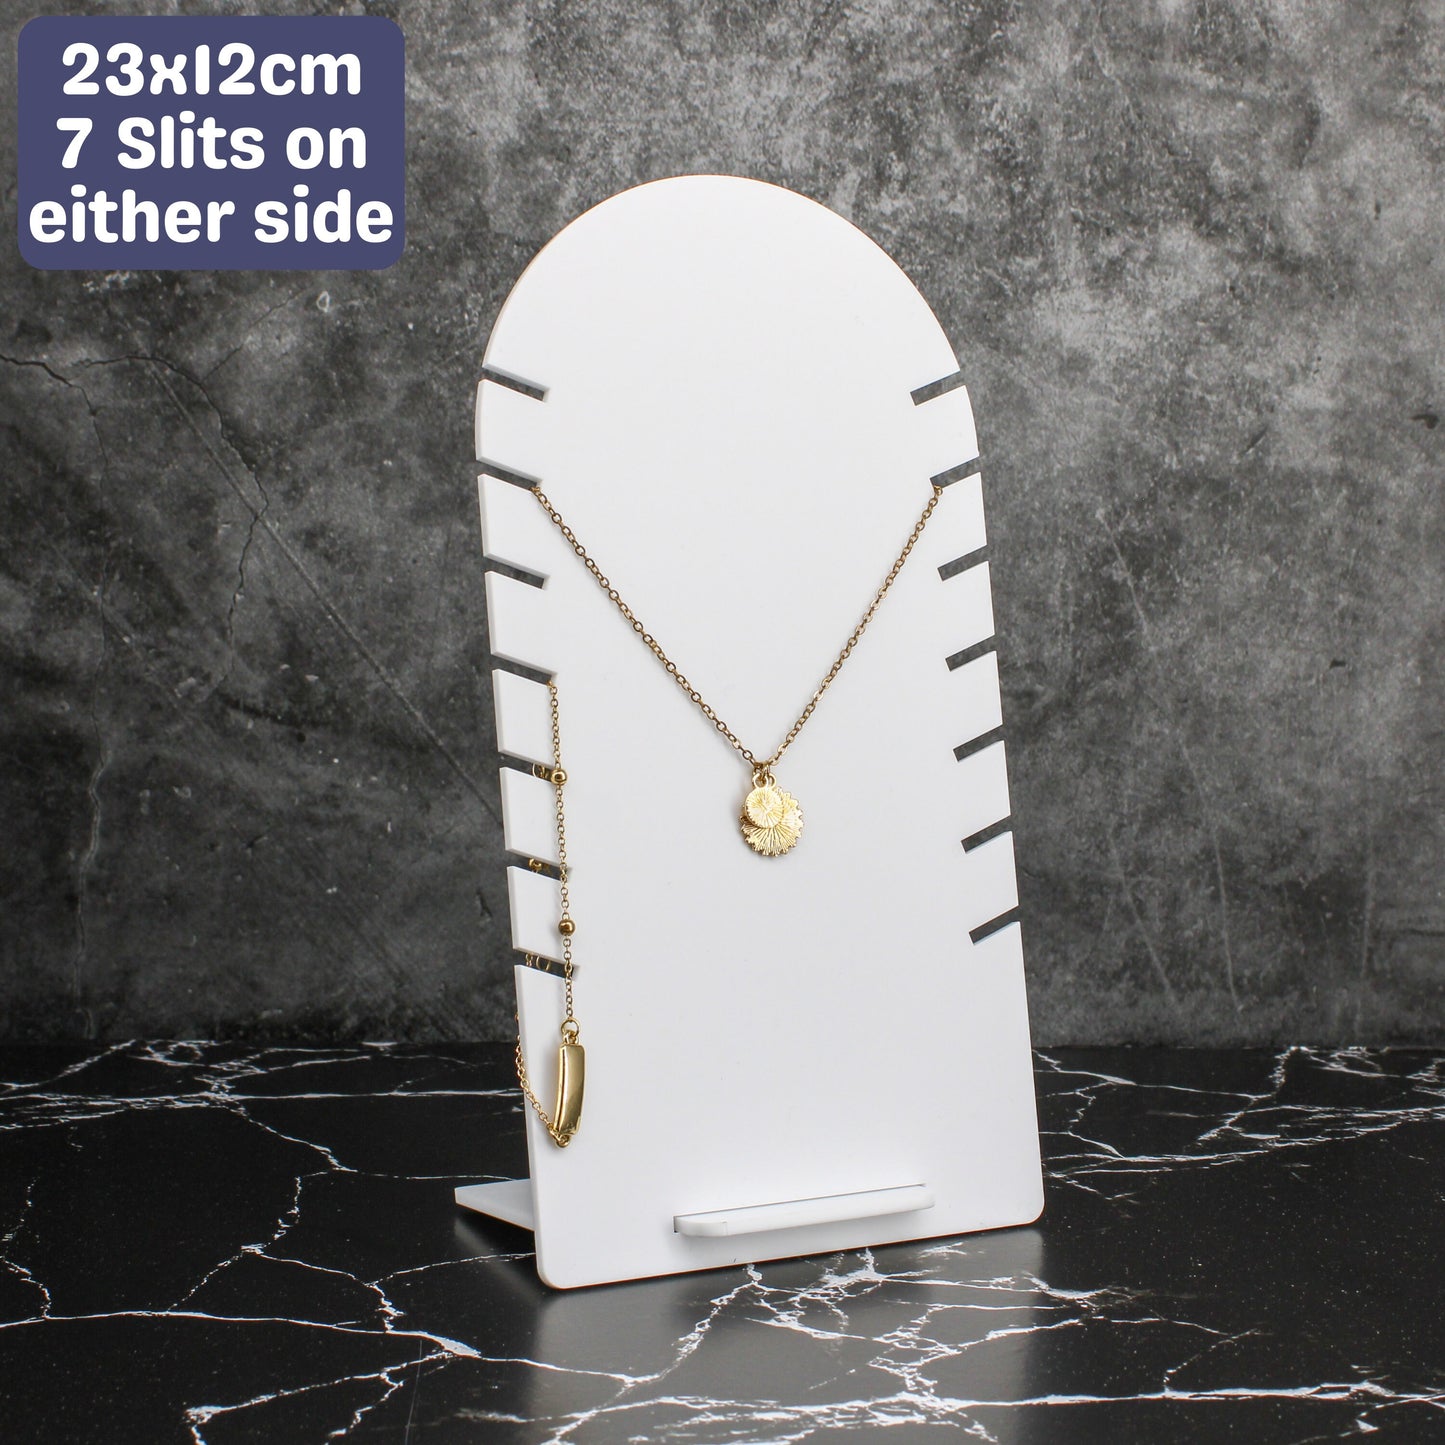 Minimalist Arch Necklace Holder - Elegant Jewellery Stand Home Decor